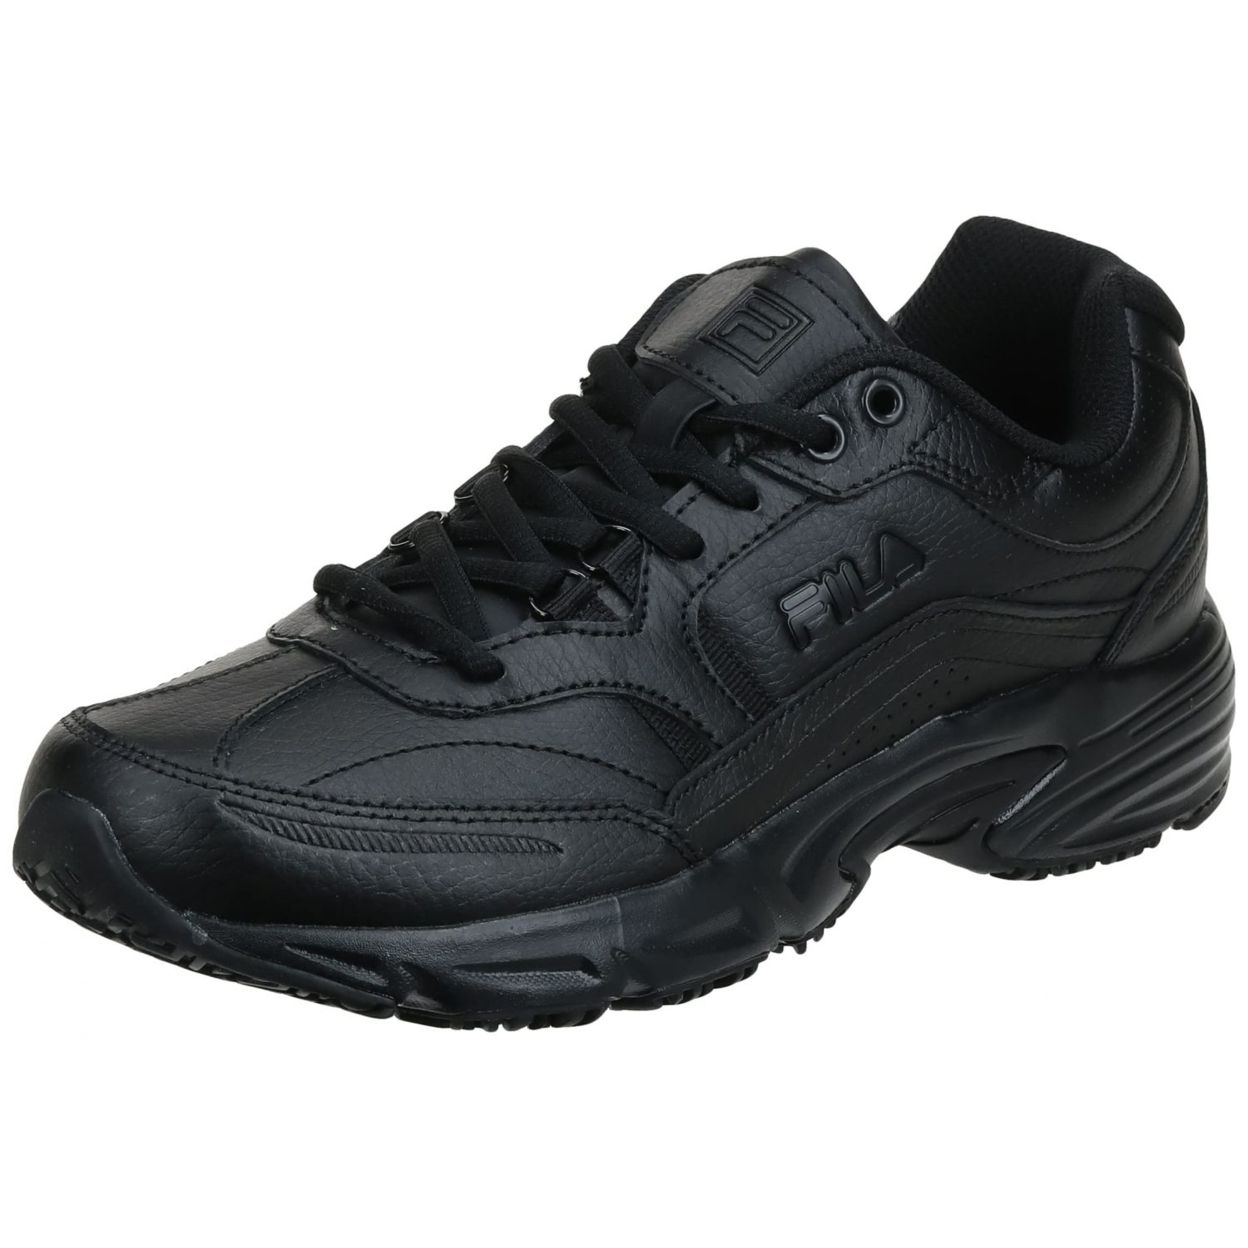 Fila Men's, Memory Workshift Slip Resistant Composite Toe Shoe - Wide Width BLK/BLK/BLK - Black (black 19-3911tcx), 6.5 Wide